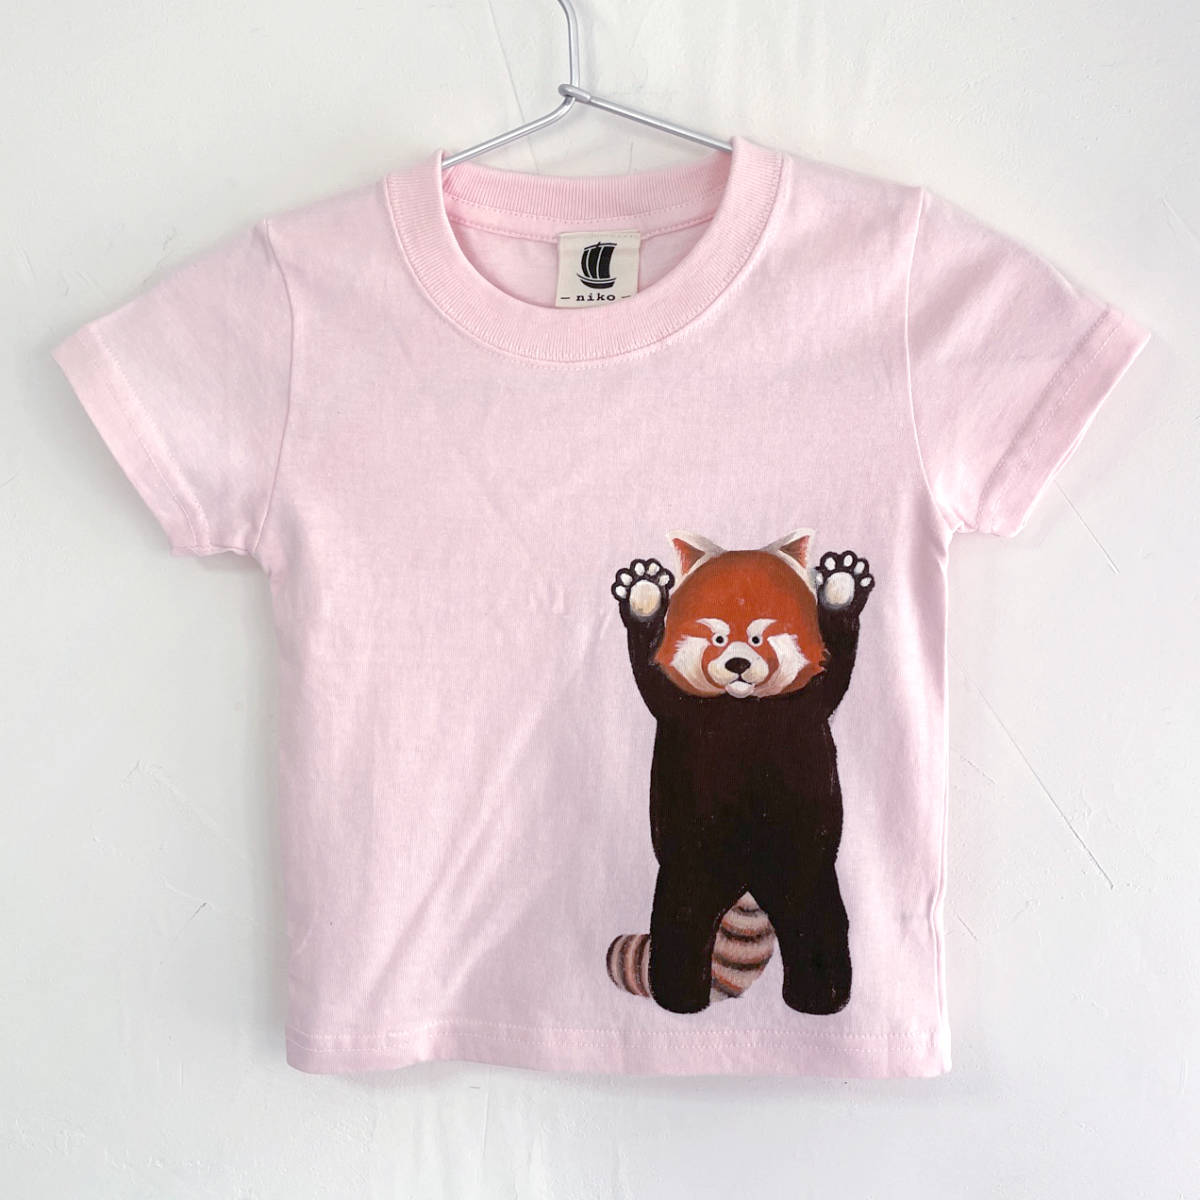 Kids T-shirt, size 120, pink, red panda print T-shirt, white, handmade, hand-drawn T-shirt, animal, tops, Short sleeve T-shirt, 120(115~124cm)